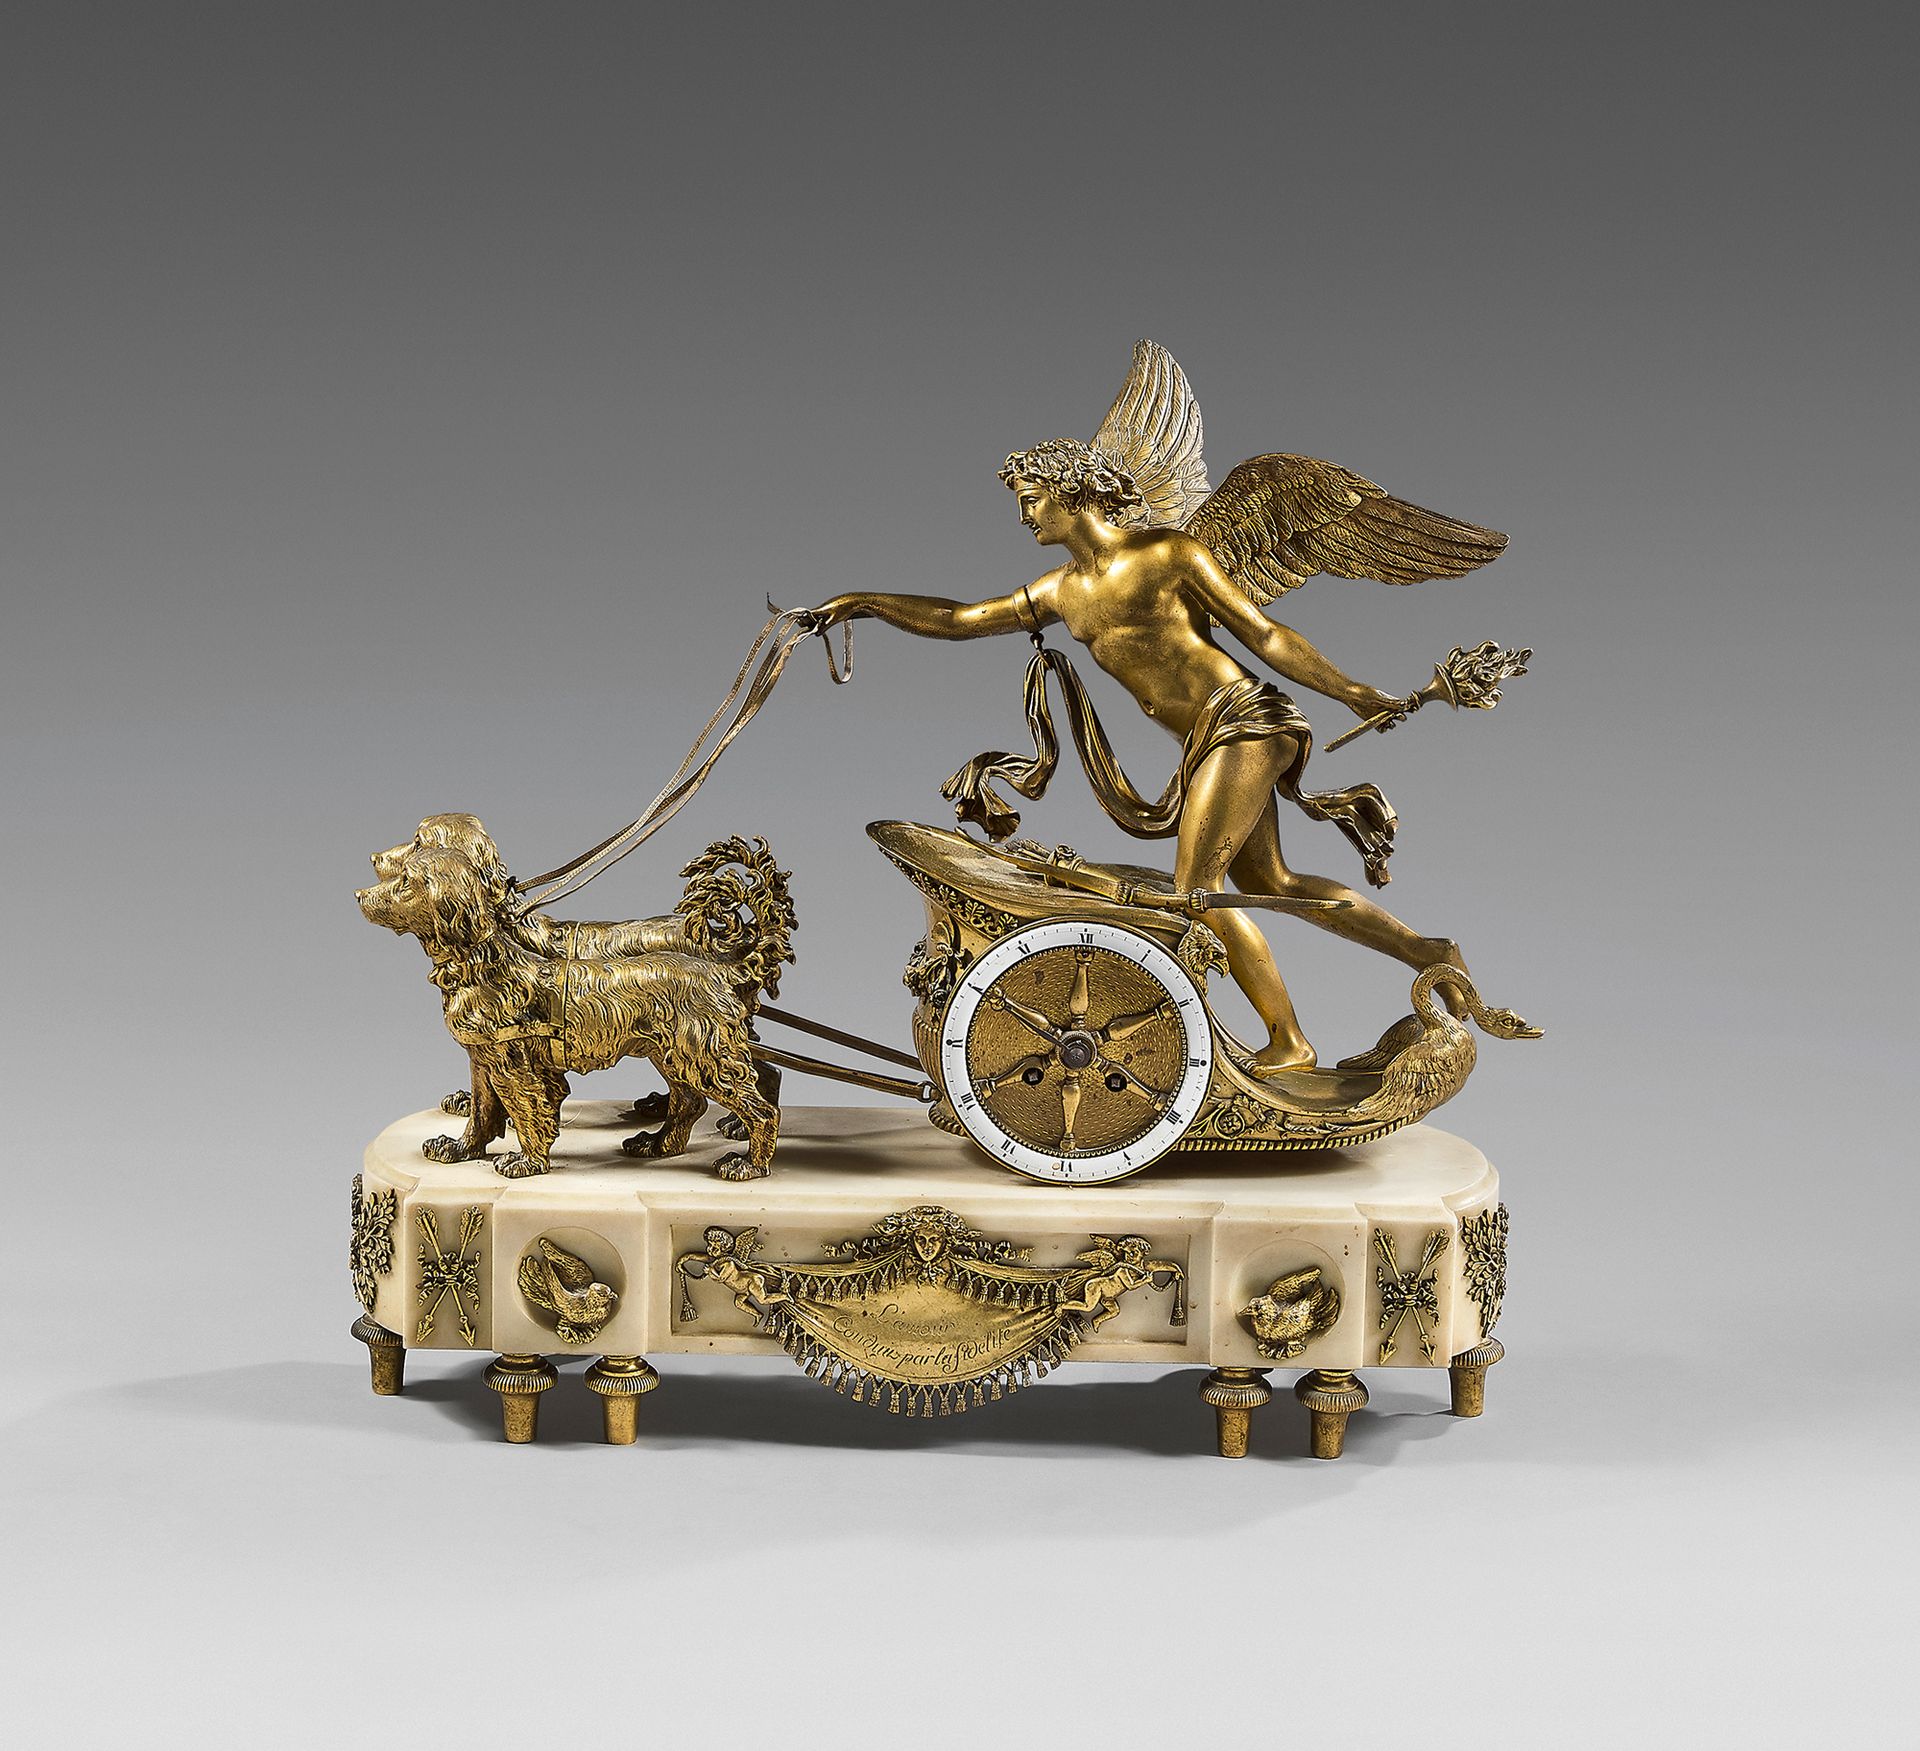 Null 一个带有环形表盘的时钟，揭示了机芯，并以罗马数字显示小时和分钟刻度；它被刻在一个古代战车的车轮上，该战车为铜制，上面有一个爱的形象，带着翅膀，略微披着&hellip;